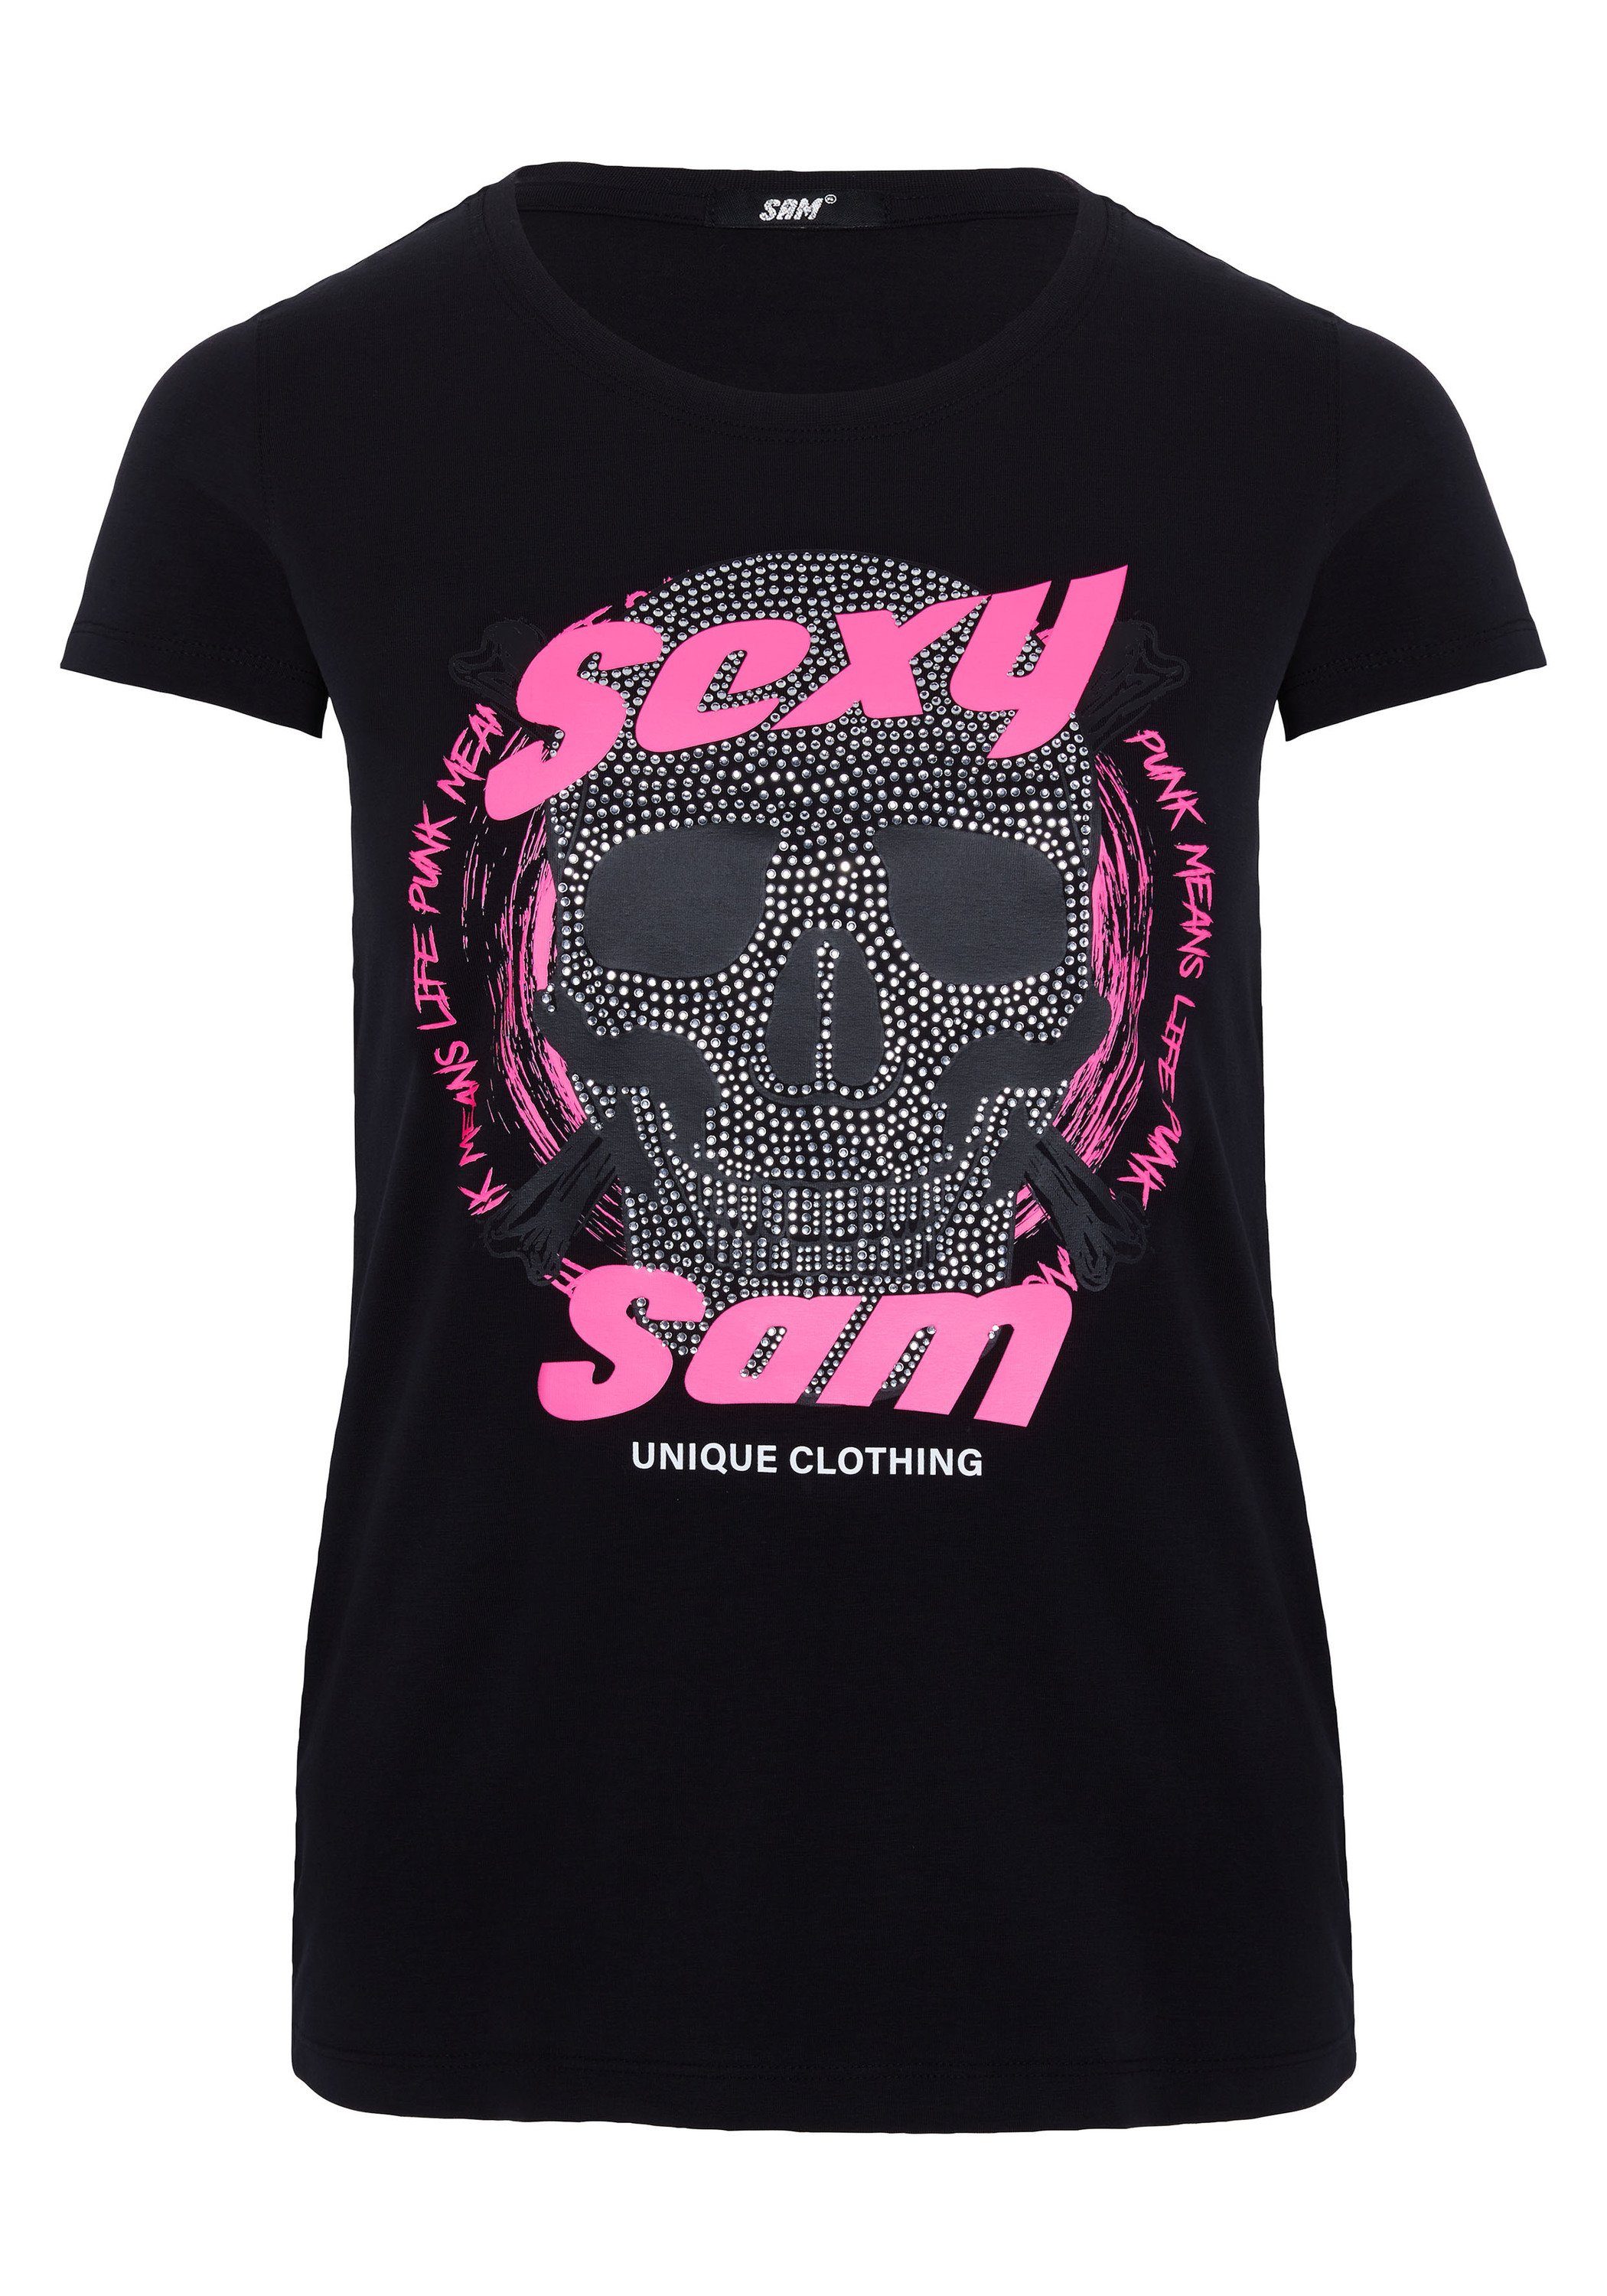 Uncle Sam Print-Shirt mit großflächigem Totenkopfdesign 19-3911 Deep Black